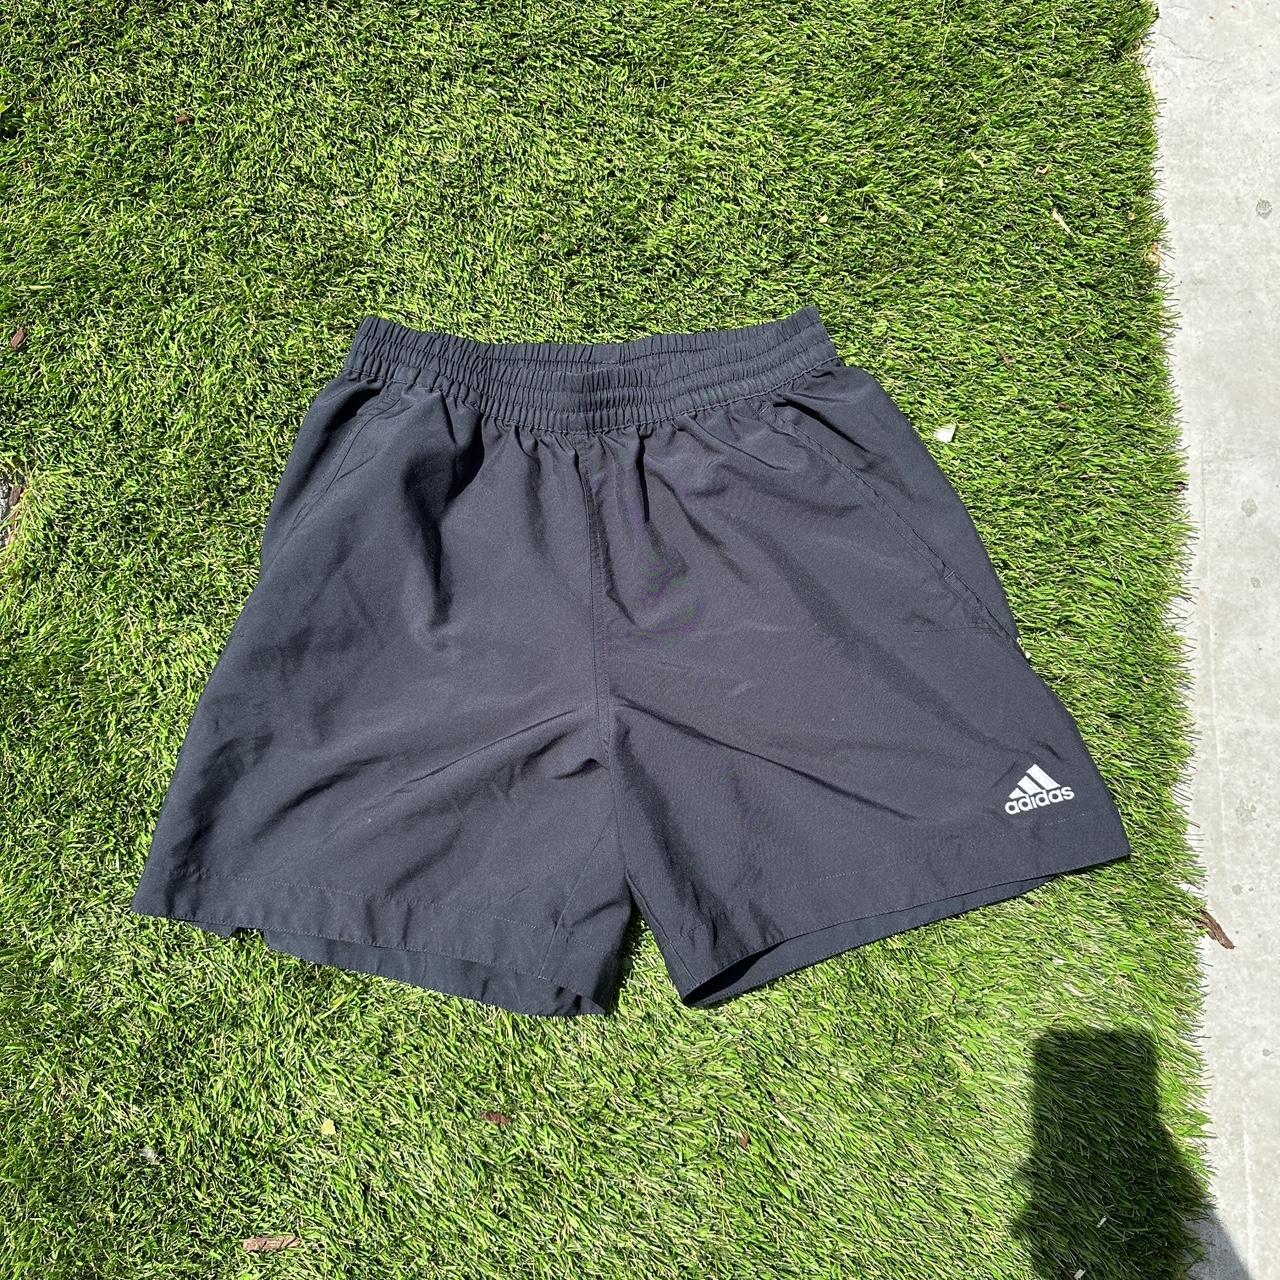 Adidas Men's Black and Navy Shorts | Depop